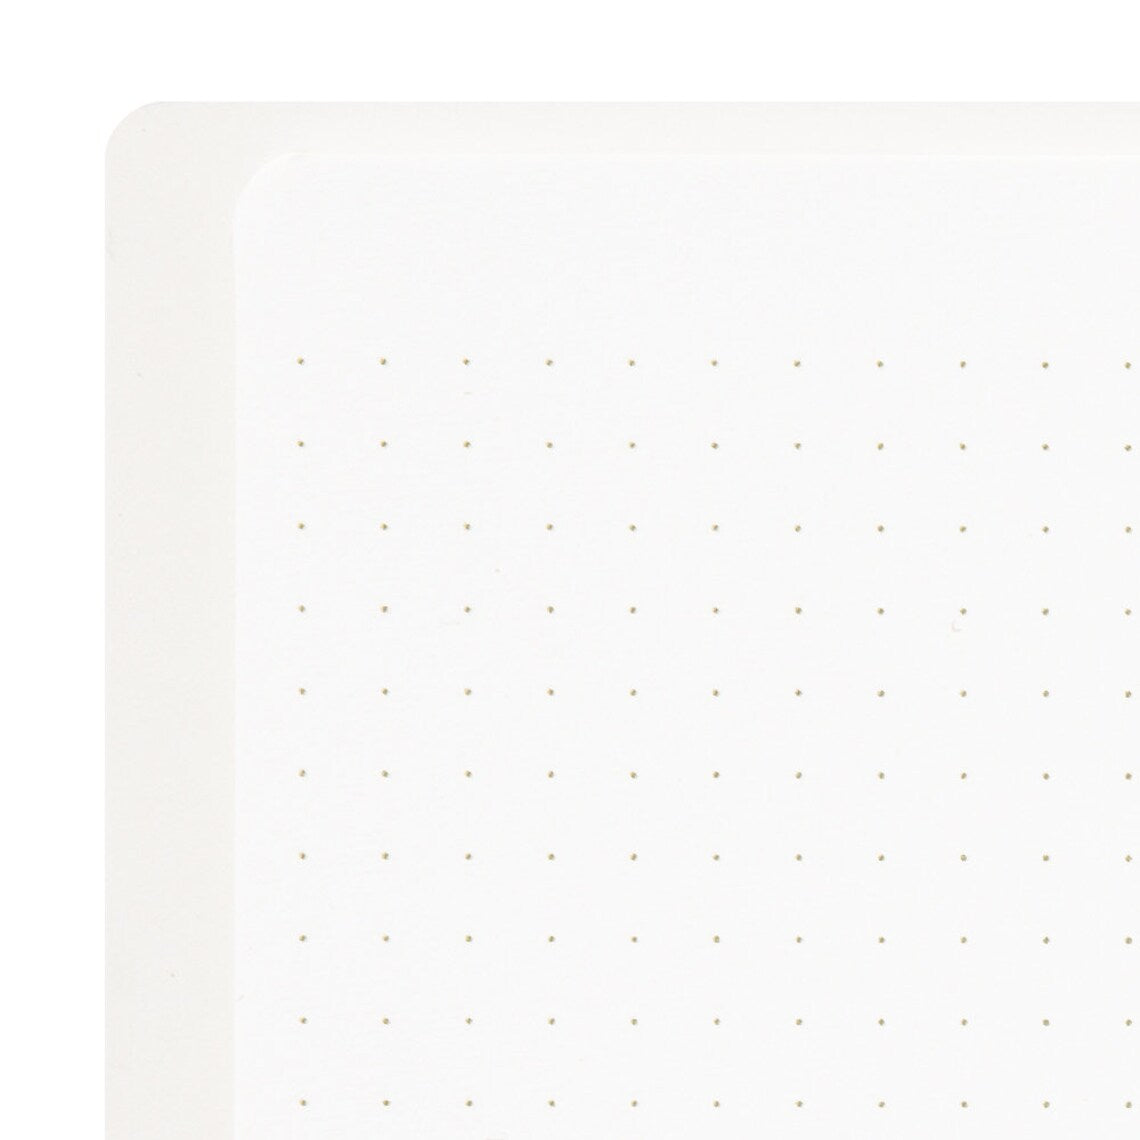 Midori White A5 Dotted Notebook smooth paper - Paper Kooka Australia